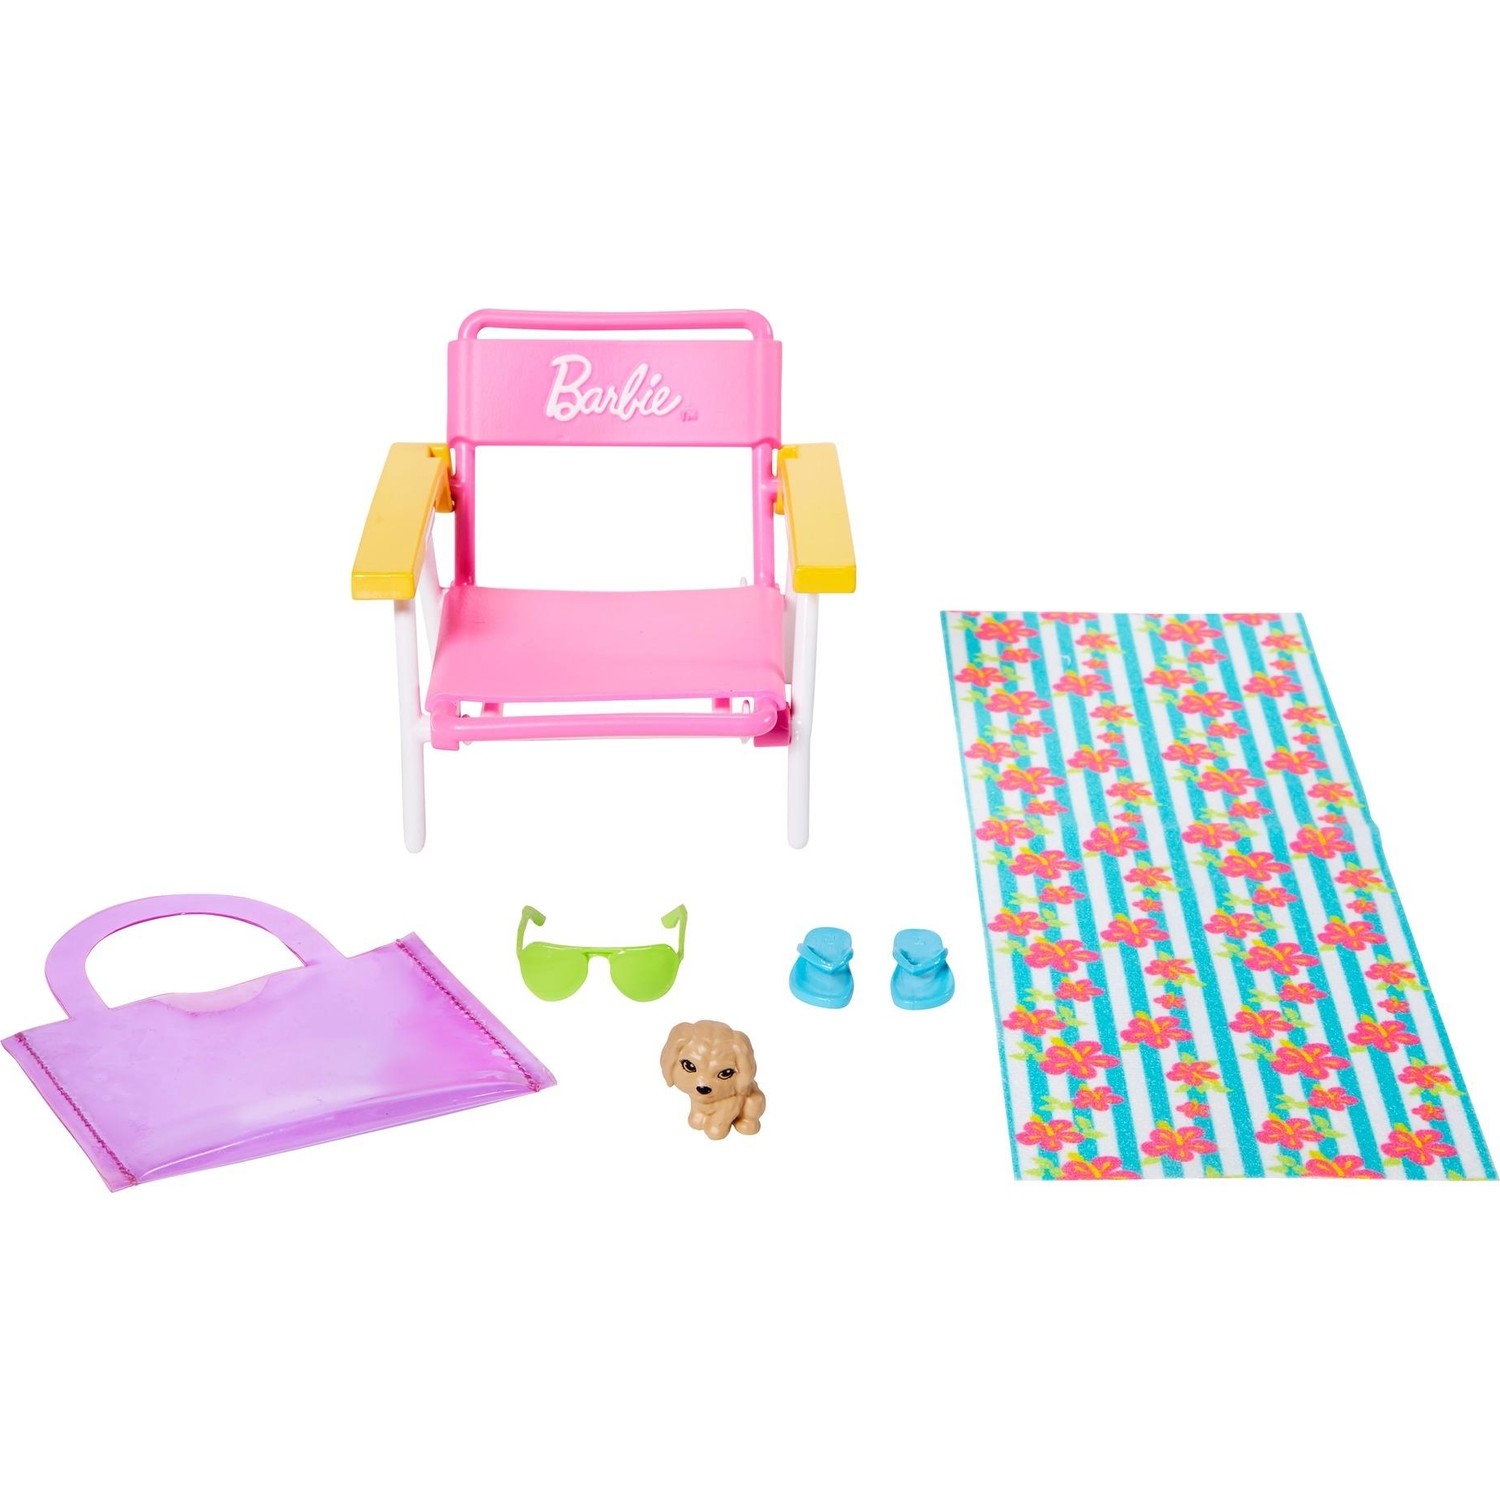 Игровой набор Barbie Home Accessory Packs GRG56 наборы для творчества barbie слайм тайм набор барби